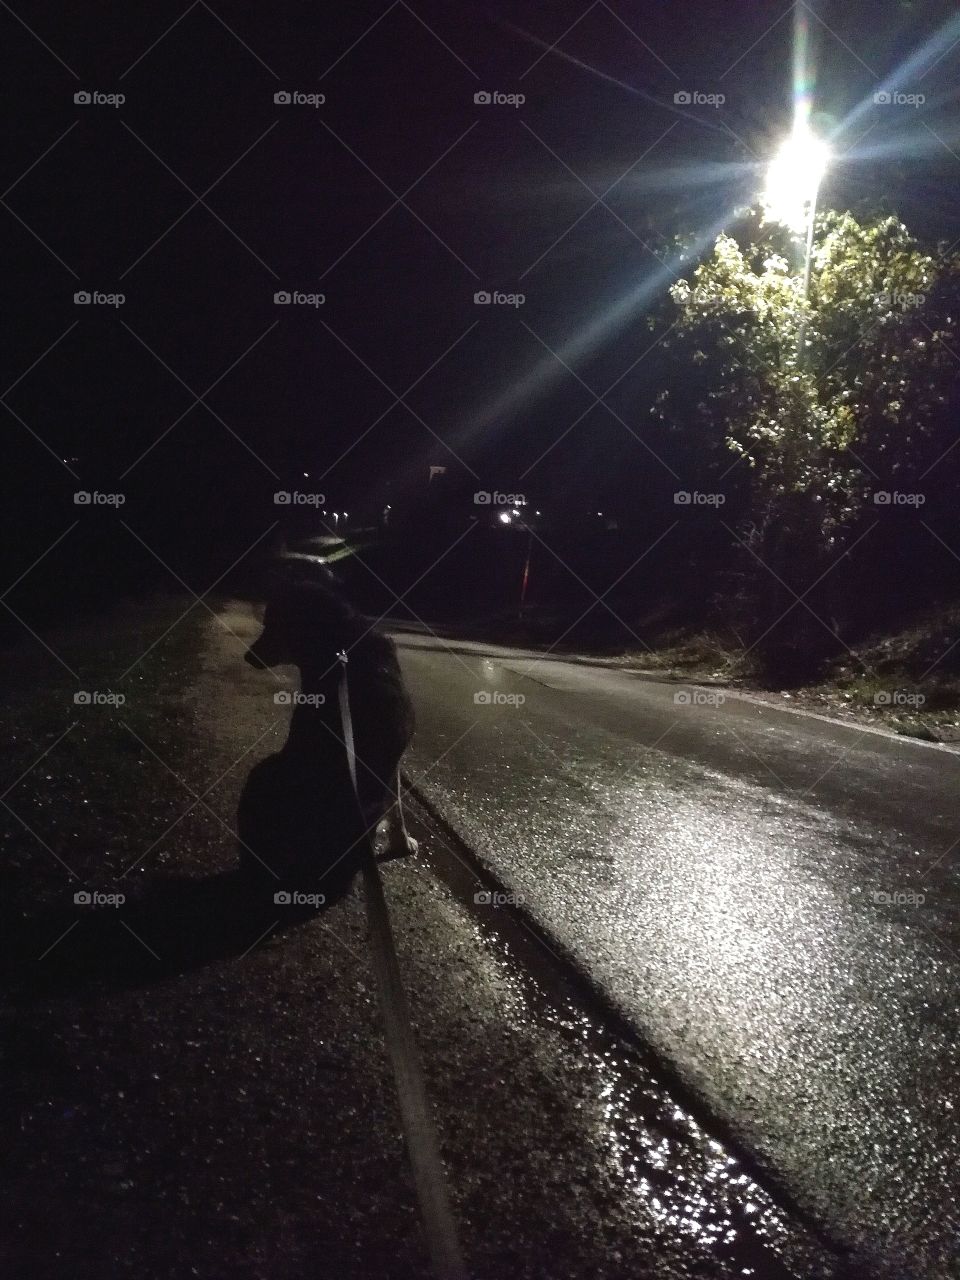 My dog in the night walk